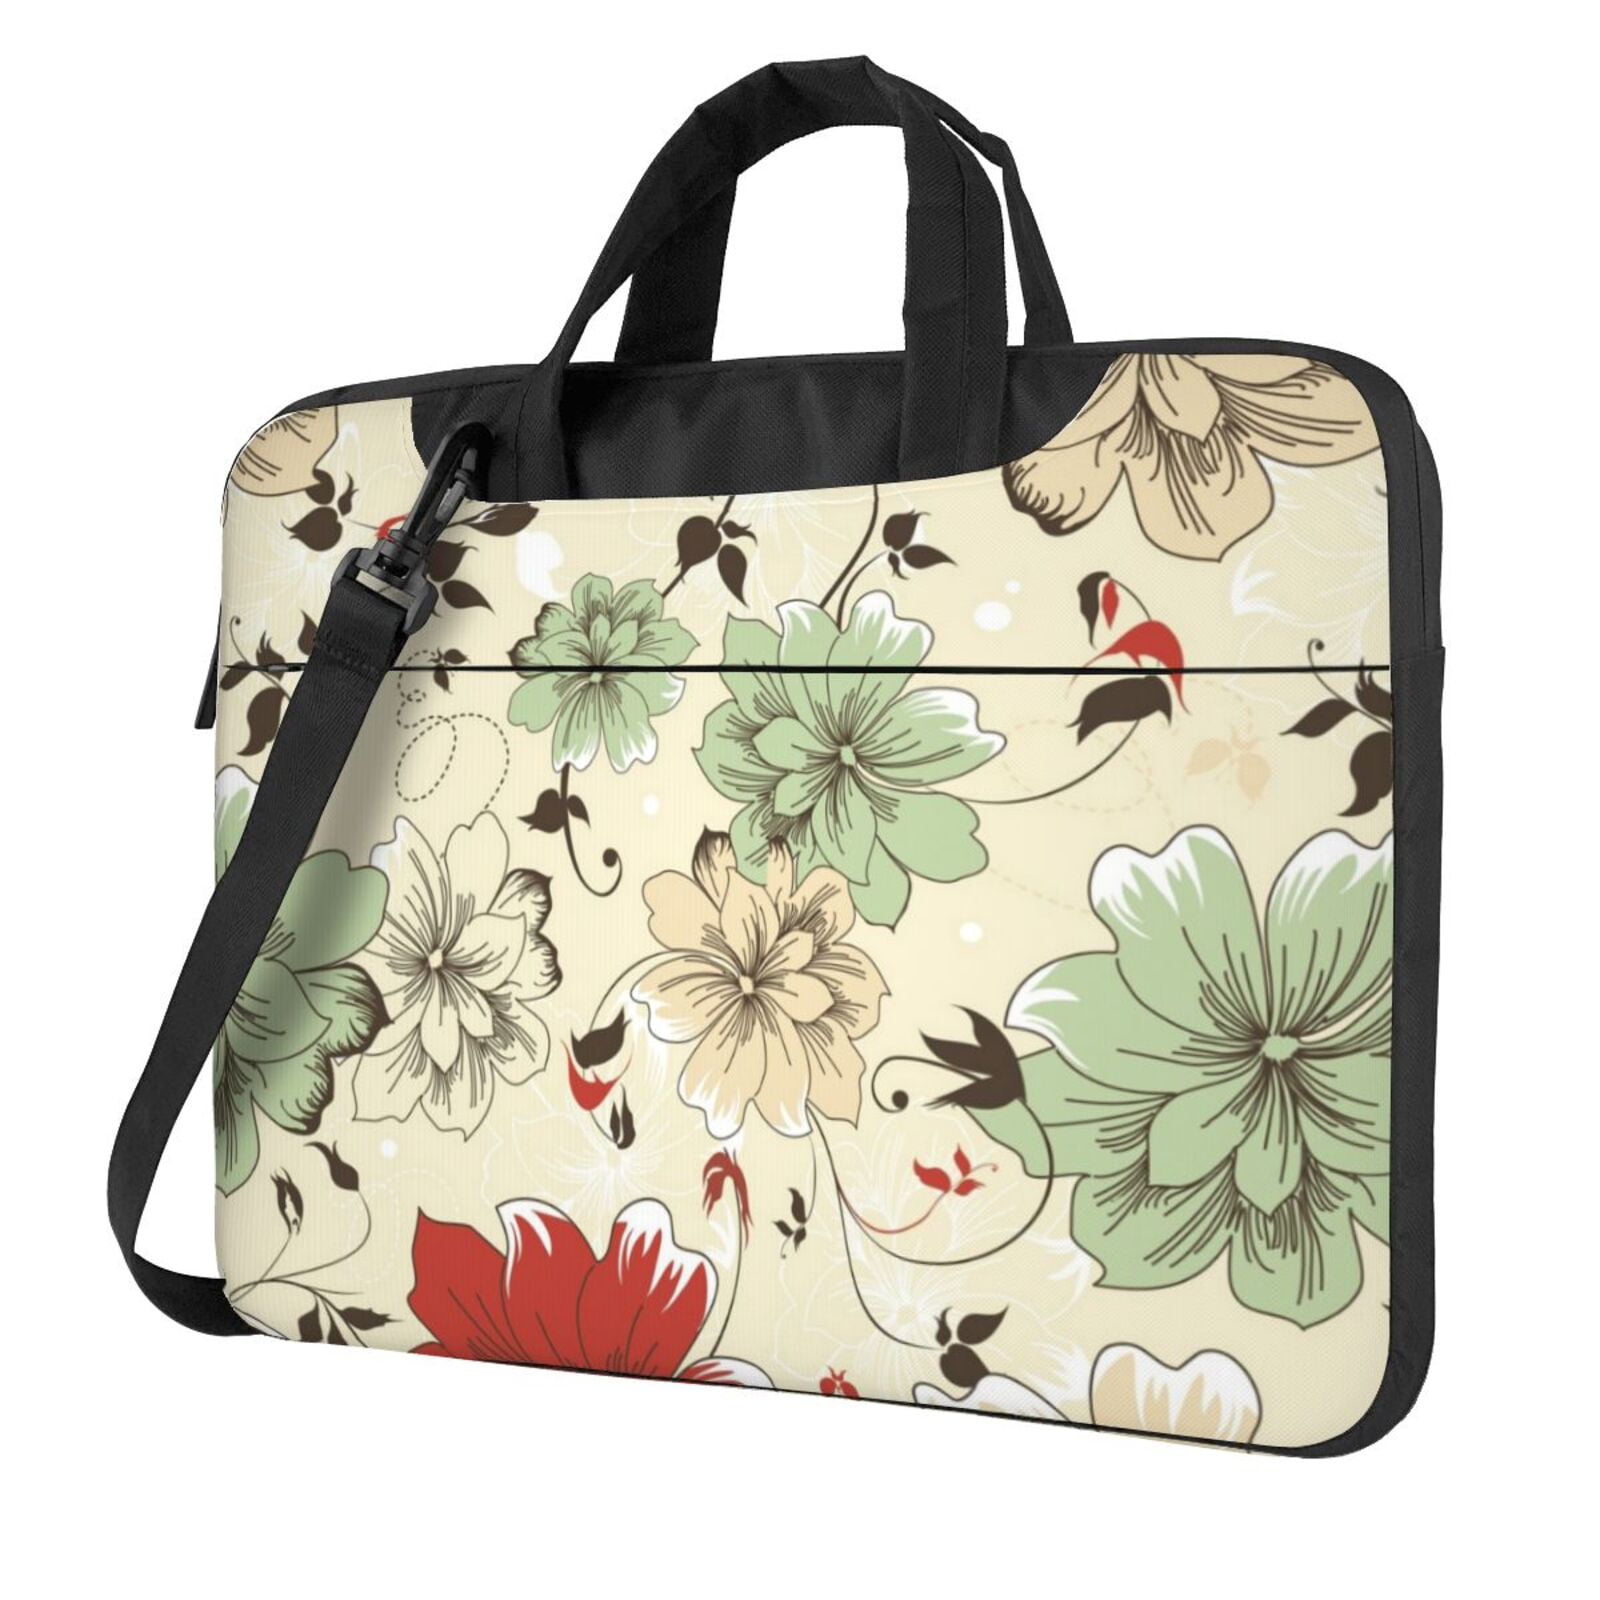 Petal Design Laptop Bag, 13 inch Laptop or Tablet, Business Casual ...